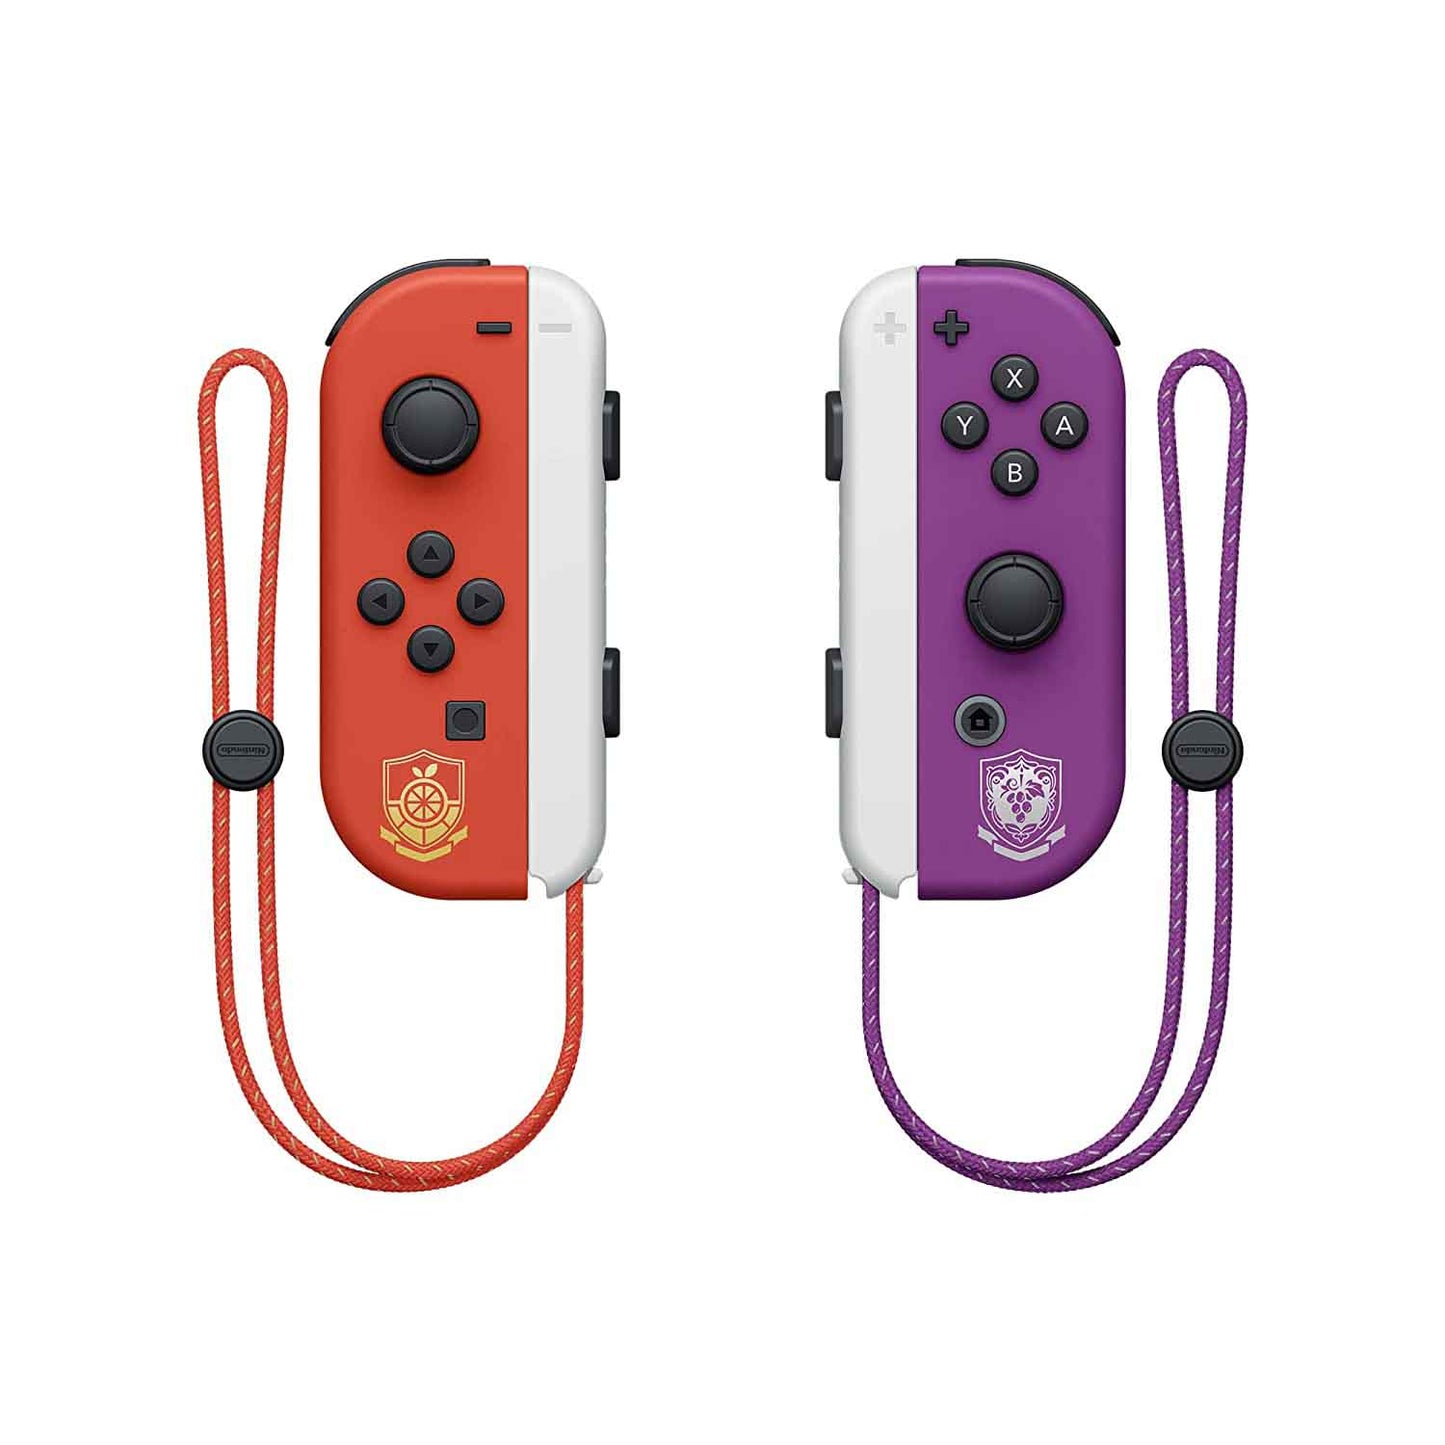 Nintendo Switch™ – OLED Model: Pokémon™ Scarlet & Violet Edition